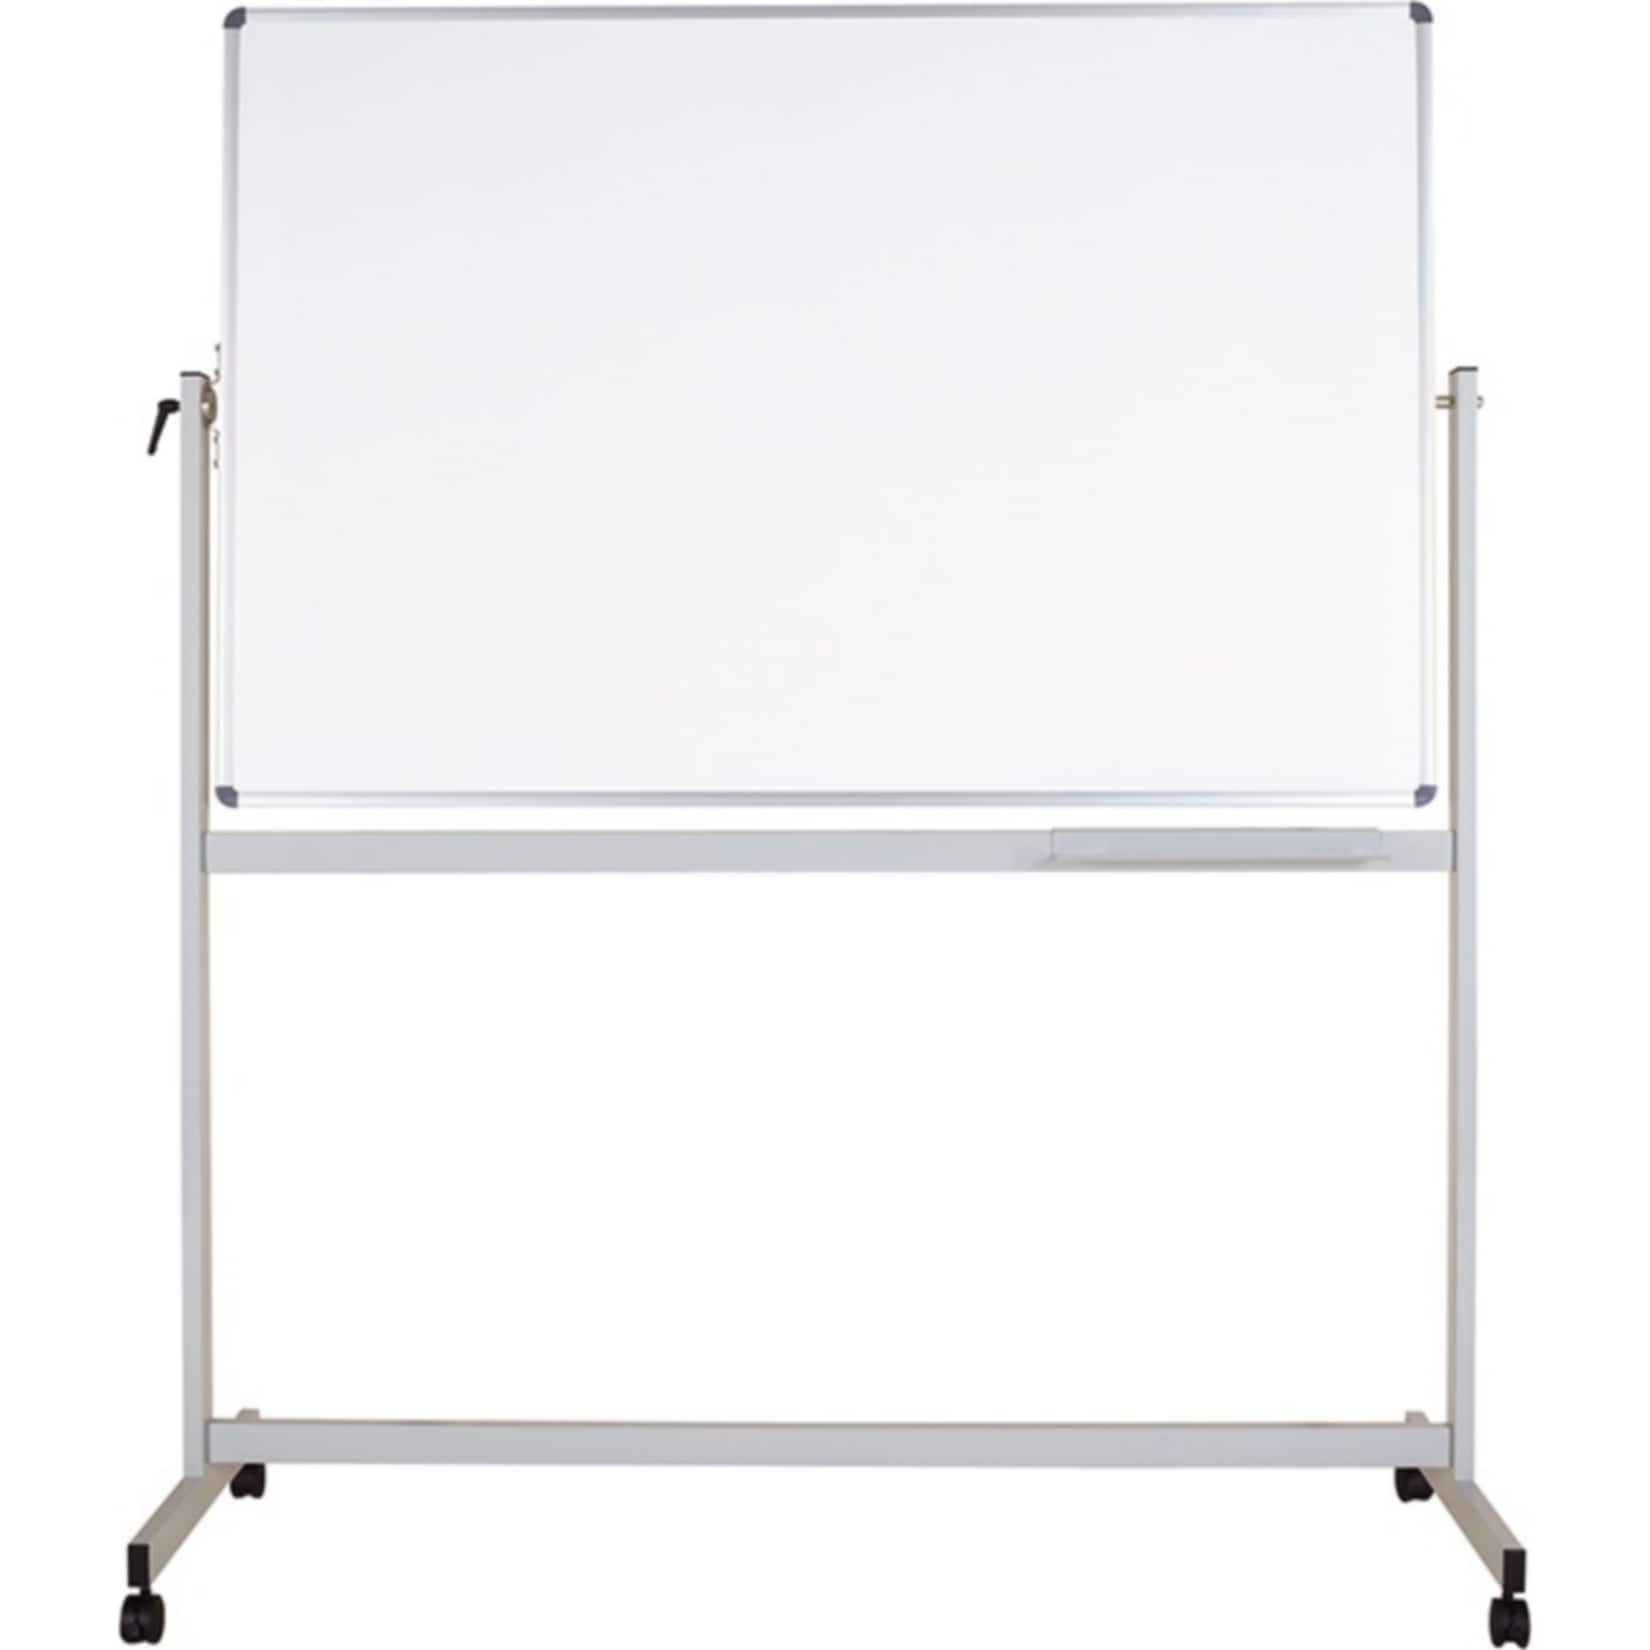 MAUL Mobiles Whiteboard MAULstandard, drehbar - 100 x 200 cm